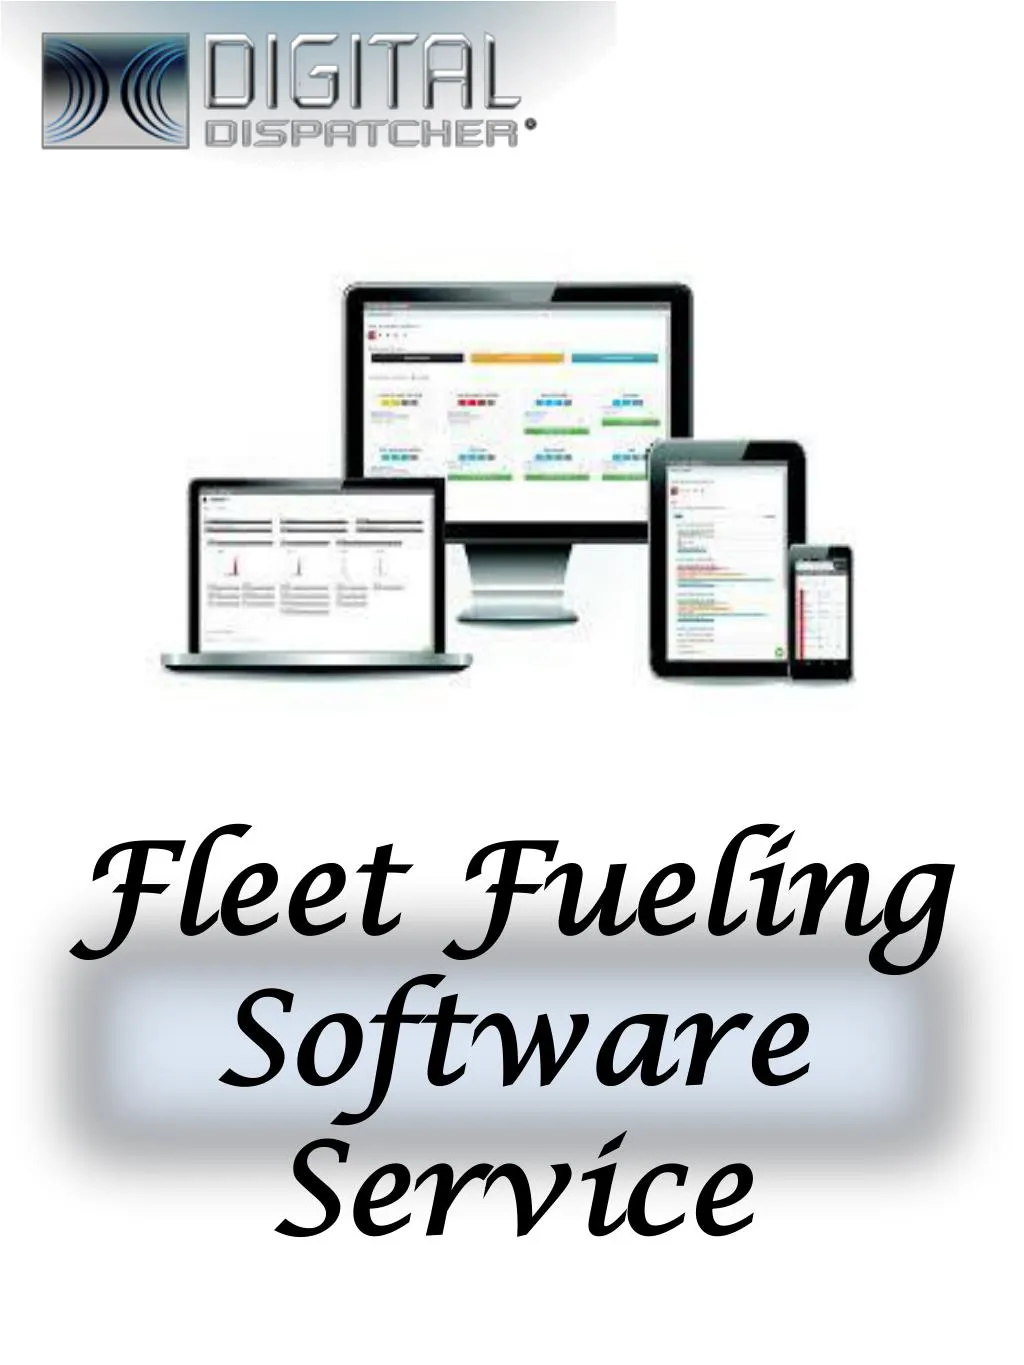 fleet fueling software service